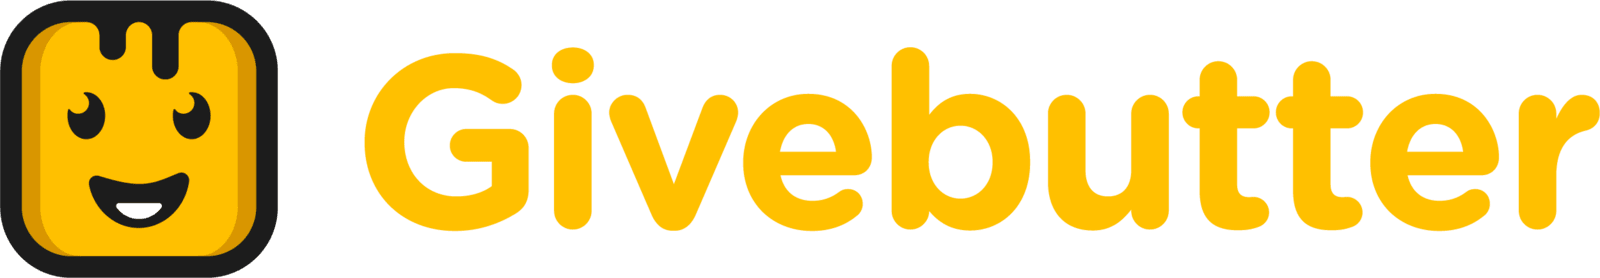 Givebutter_Logo_H_Yellow -1-